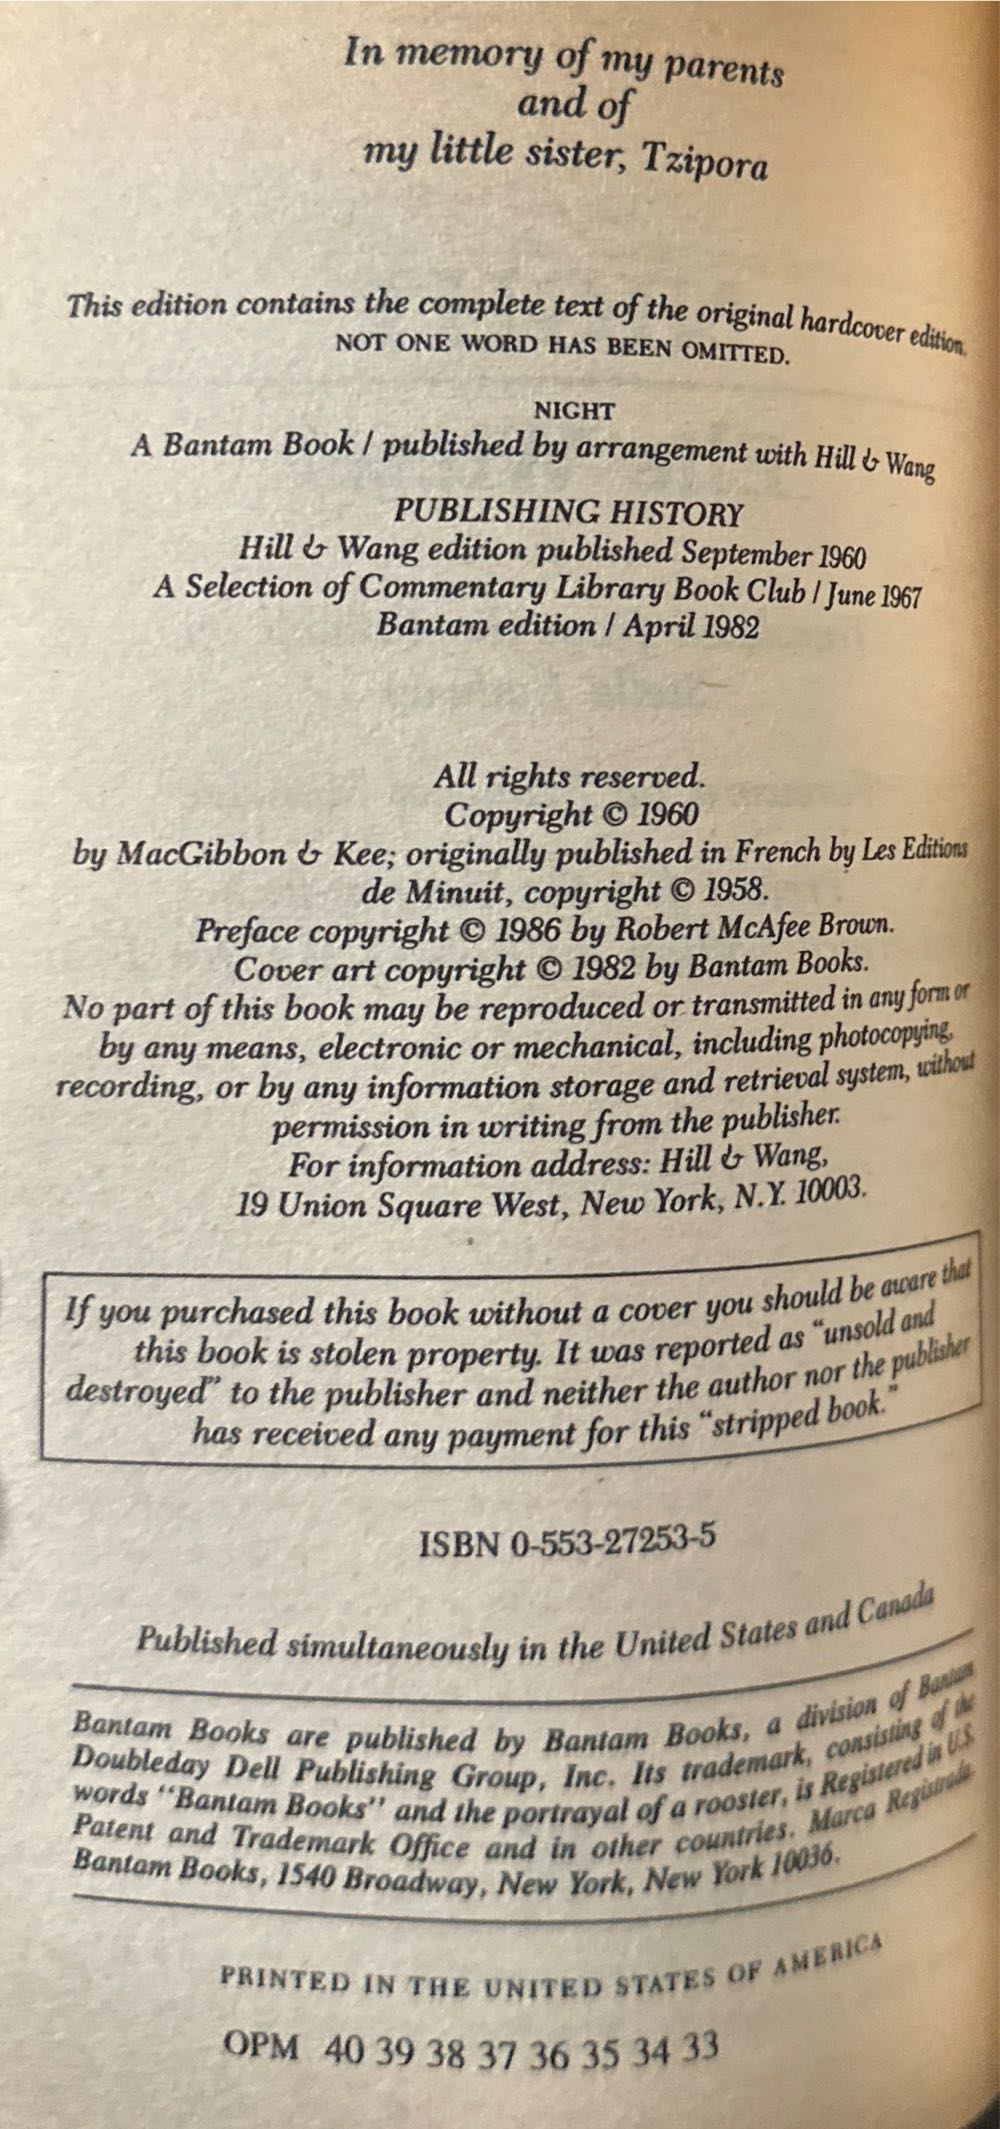 Night - Eli Wiesel (A Bantam Book - Paperback) book collectible [Barcode 9780553272536] - Main Image 3